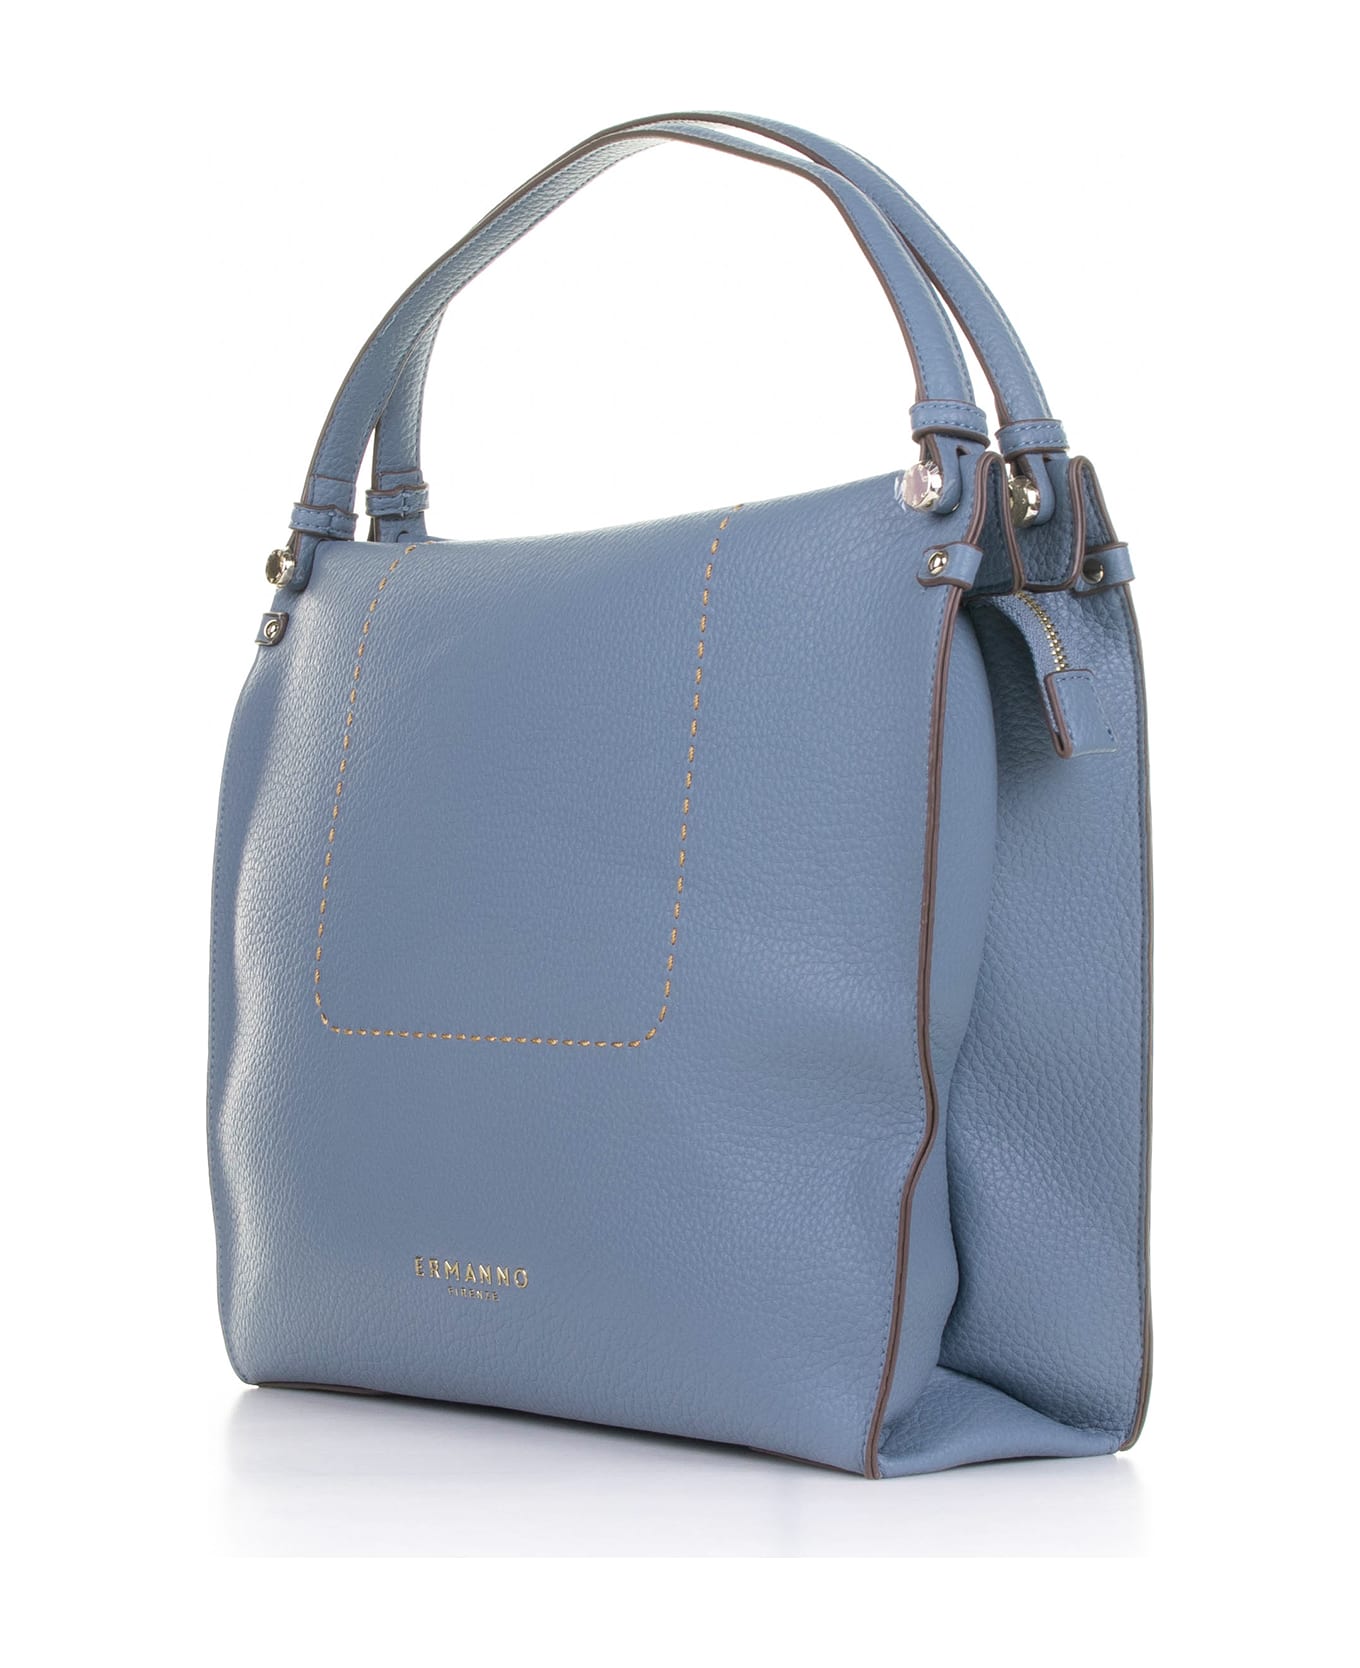 Ermanno Scervino Petra Light Blue Leather Shopping Bag - AZZURRO トートバッグ